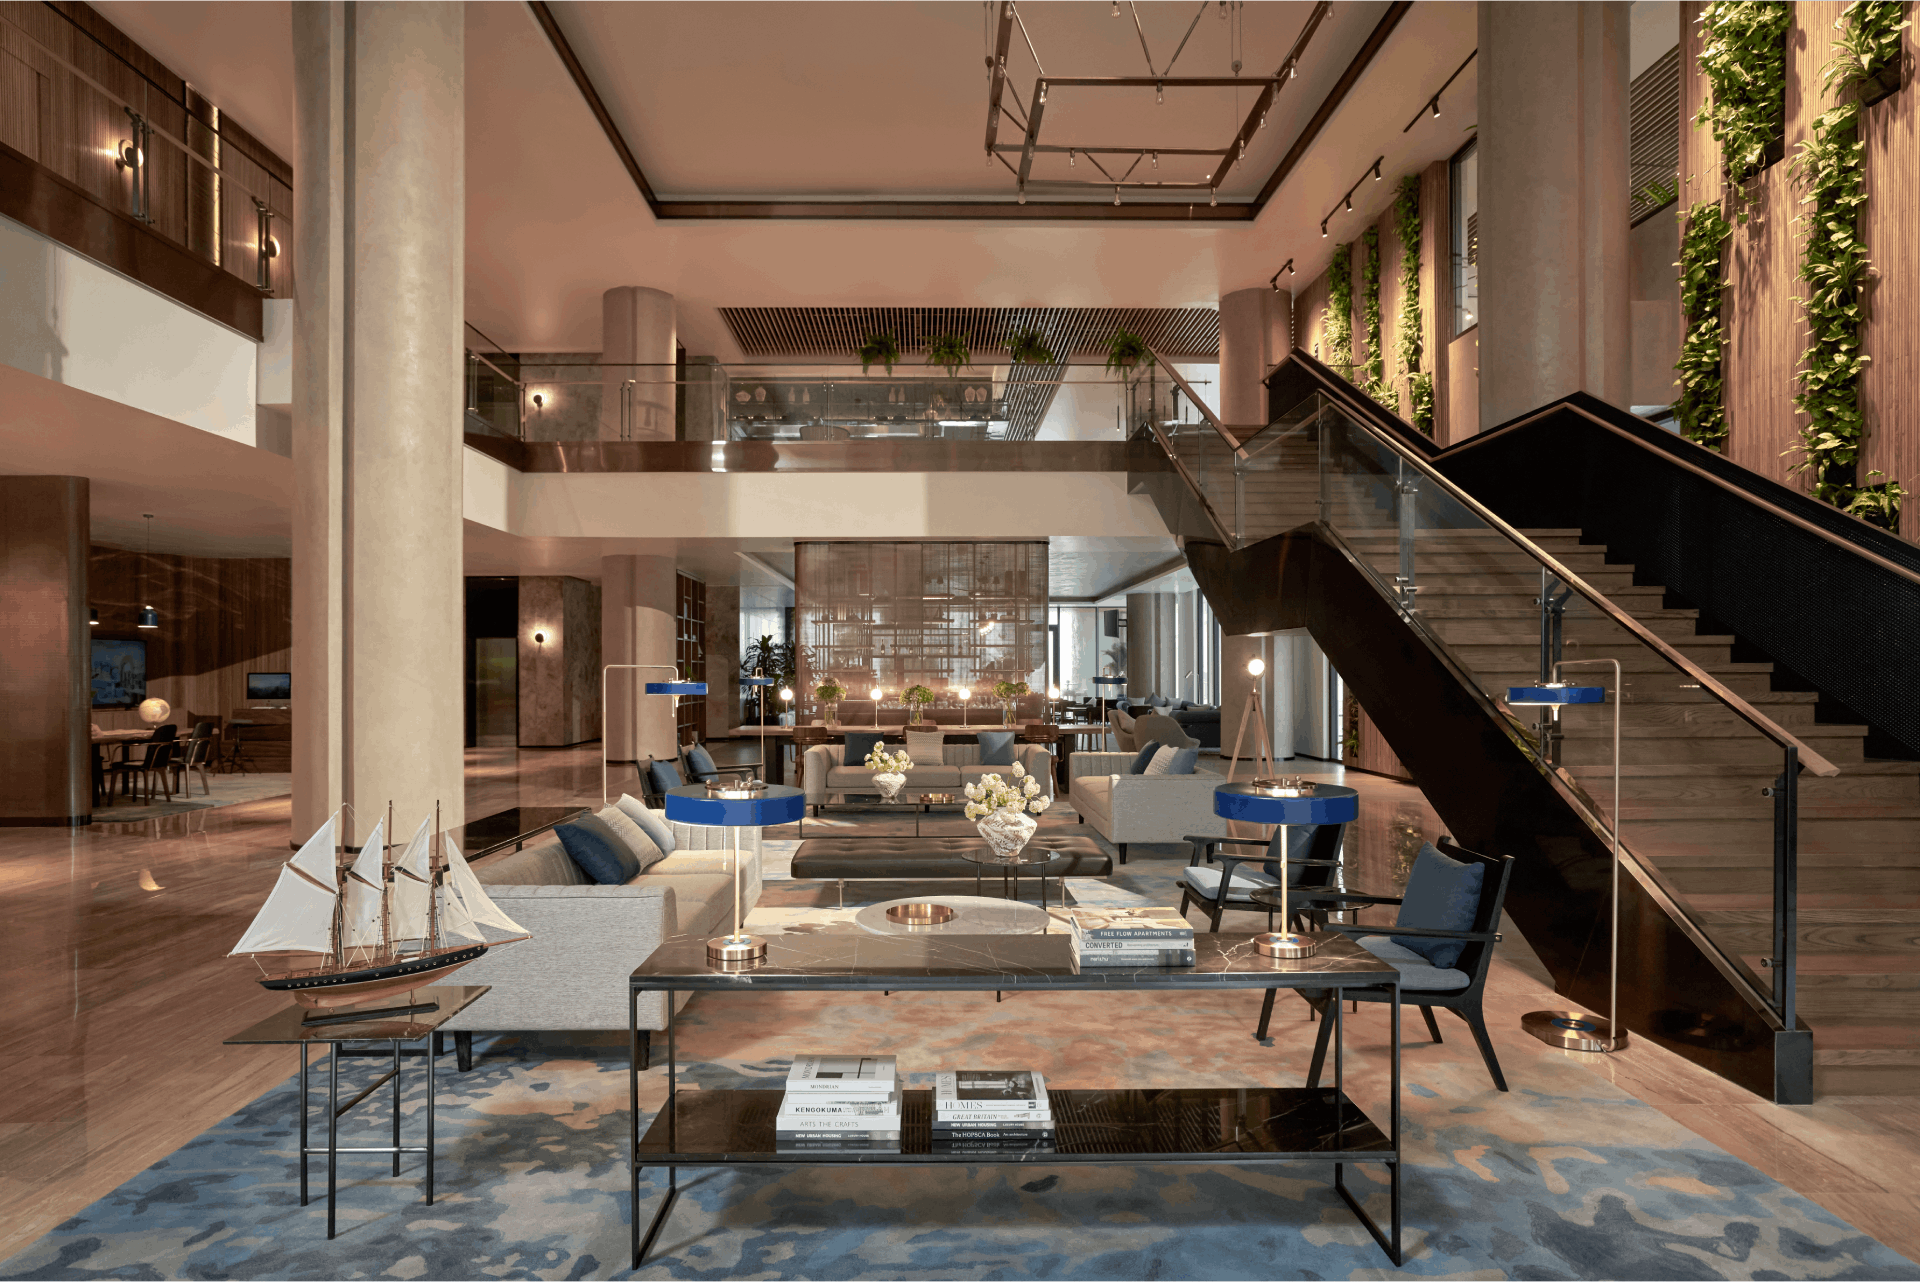 KAZE Interior Design Studio Wins Big for The Yacht Hotel’s Breathtaking Design